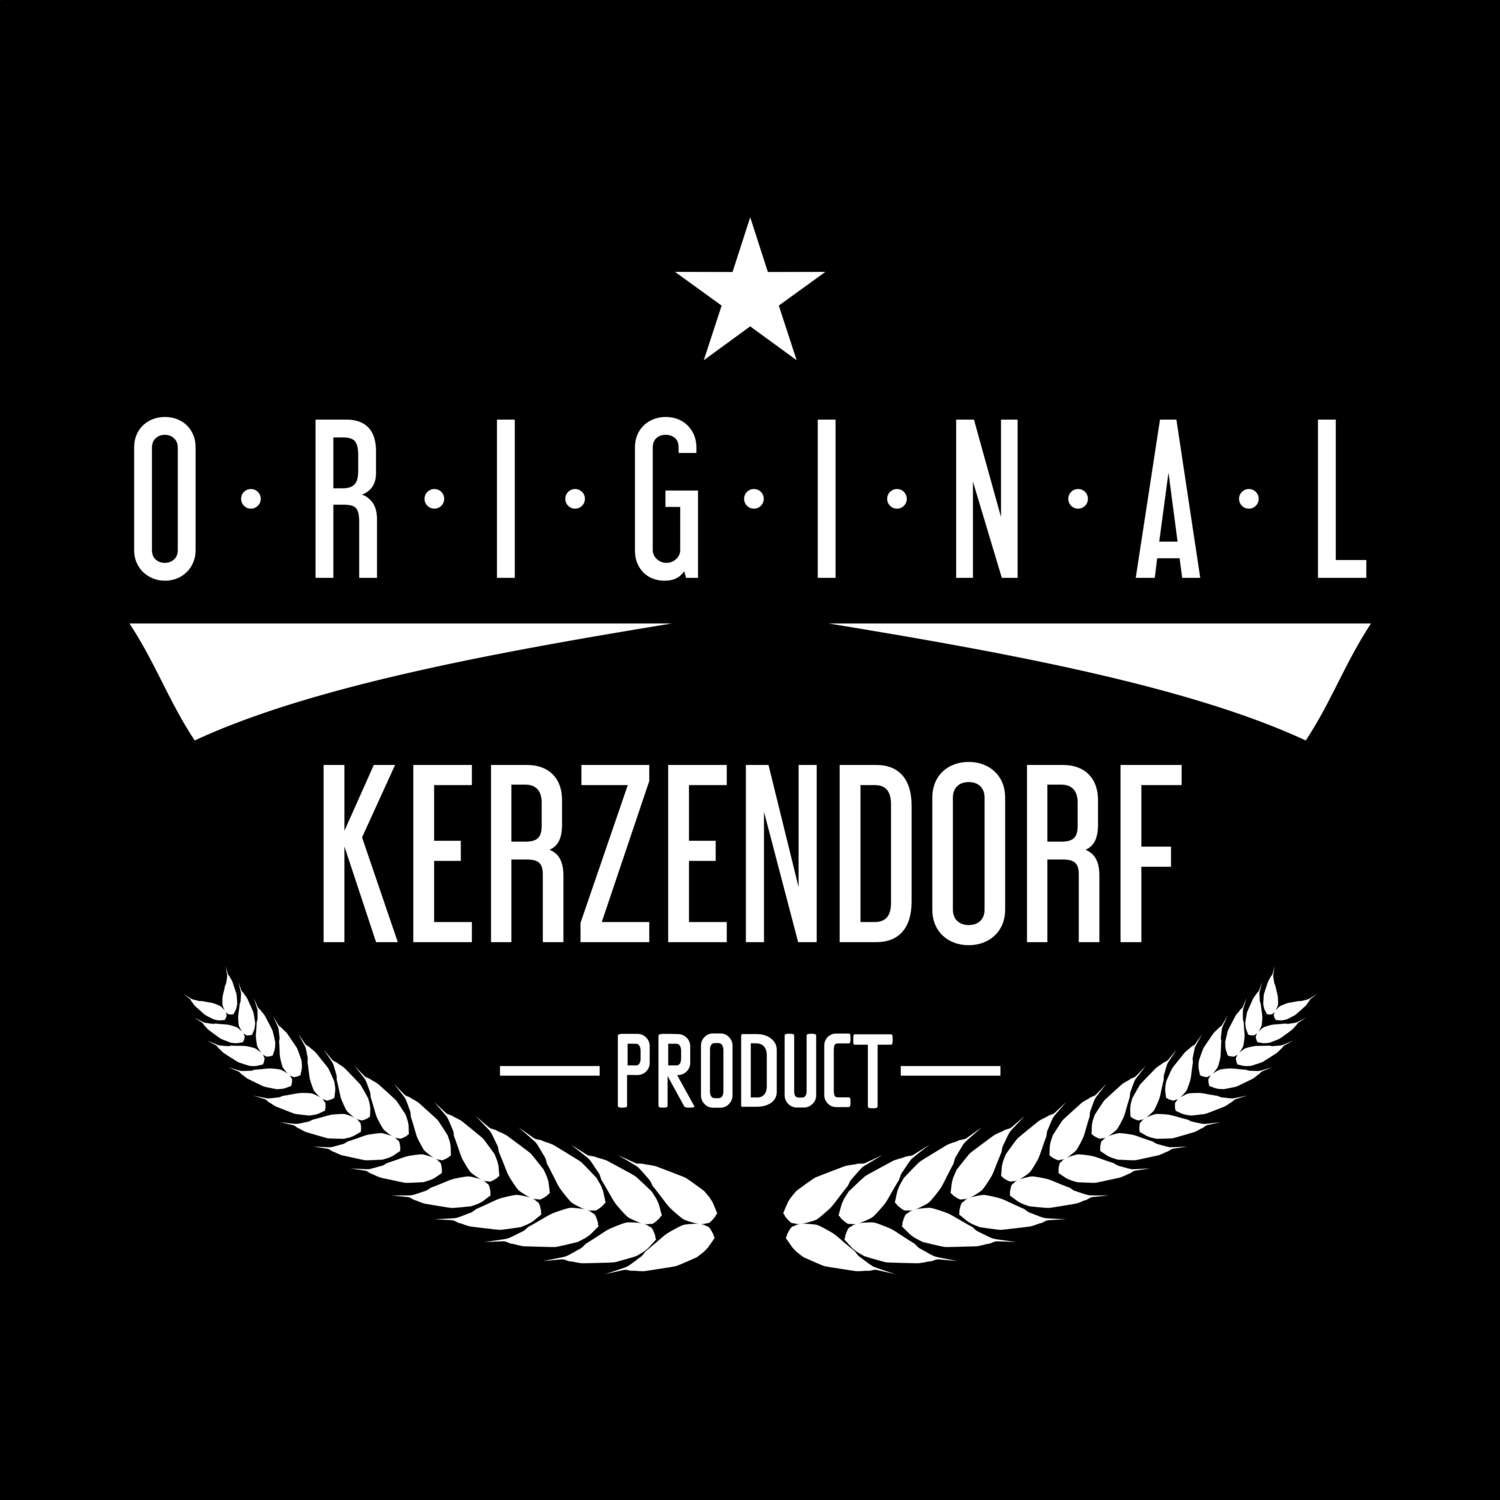 Kerzendorf T-Shirt »Original Product«